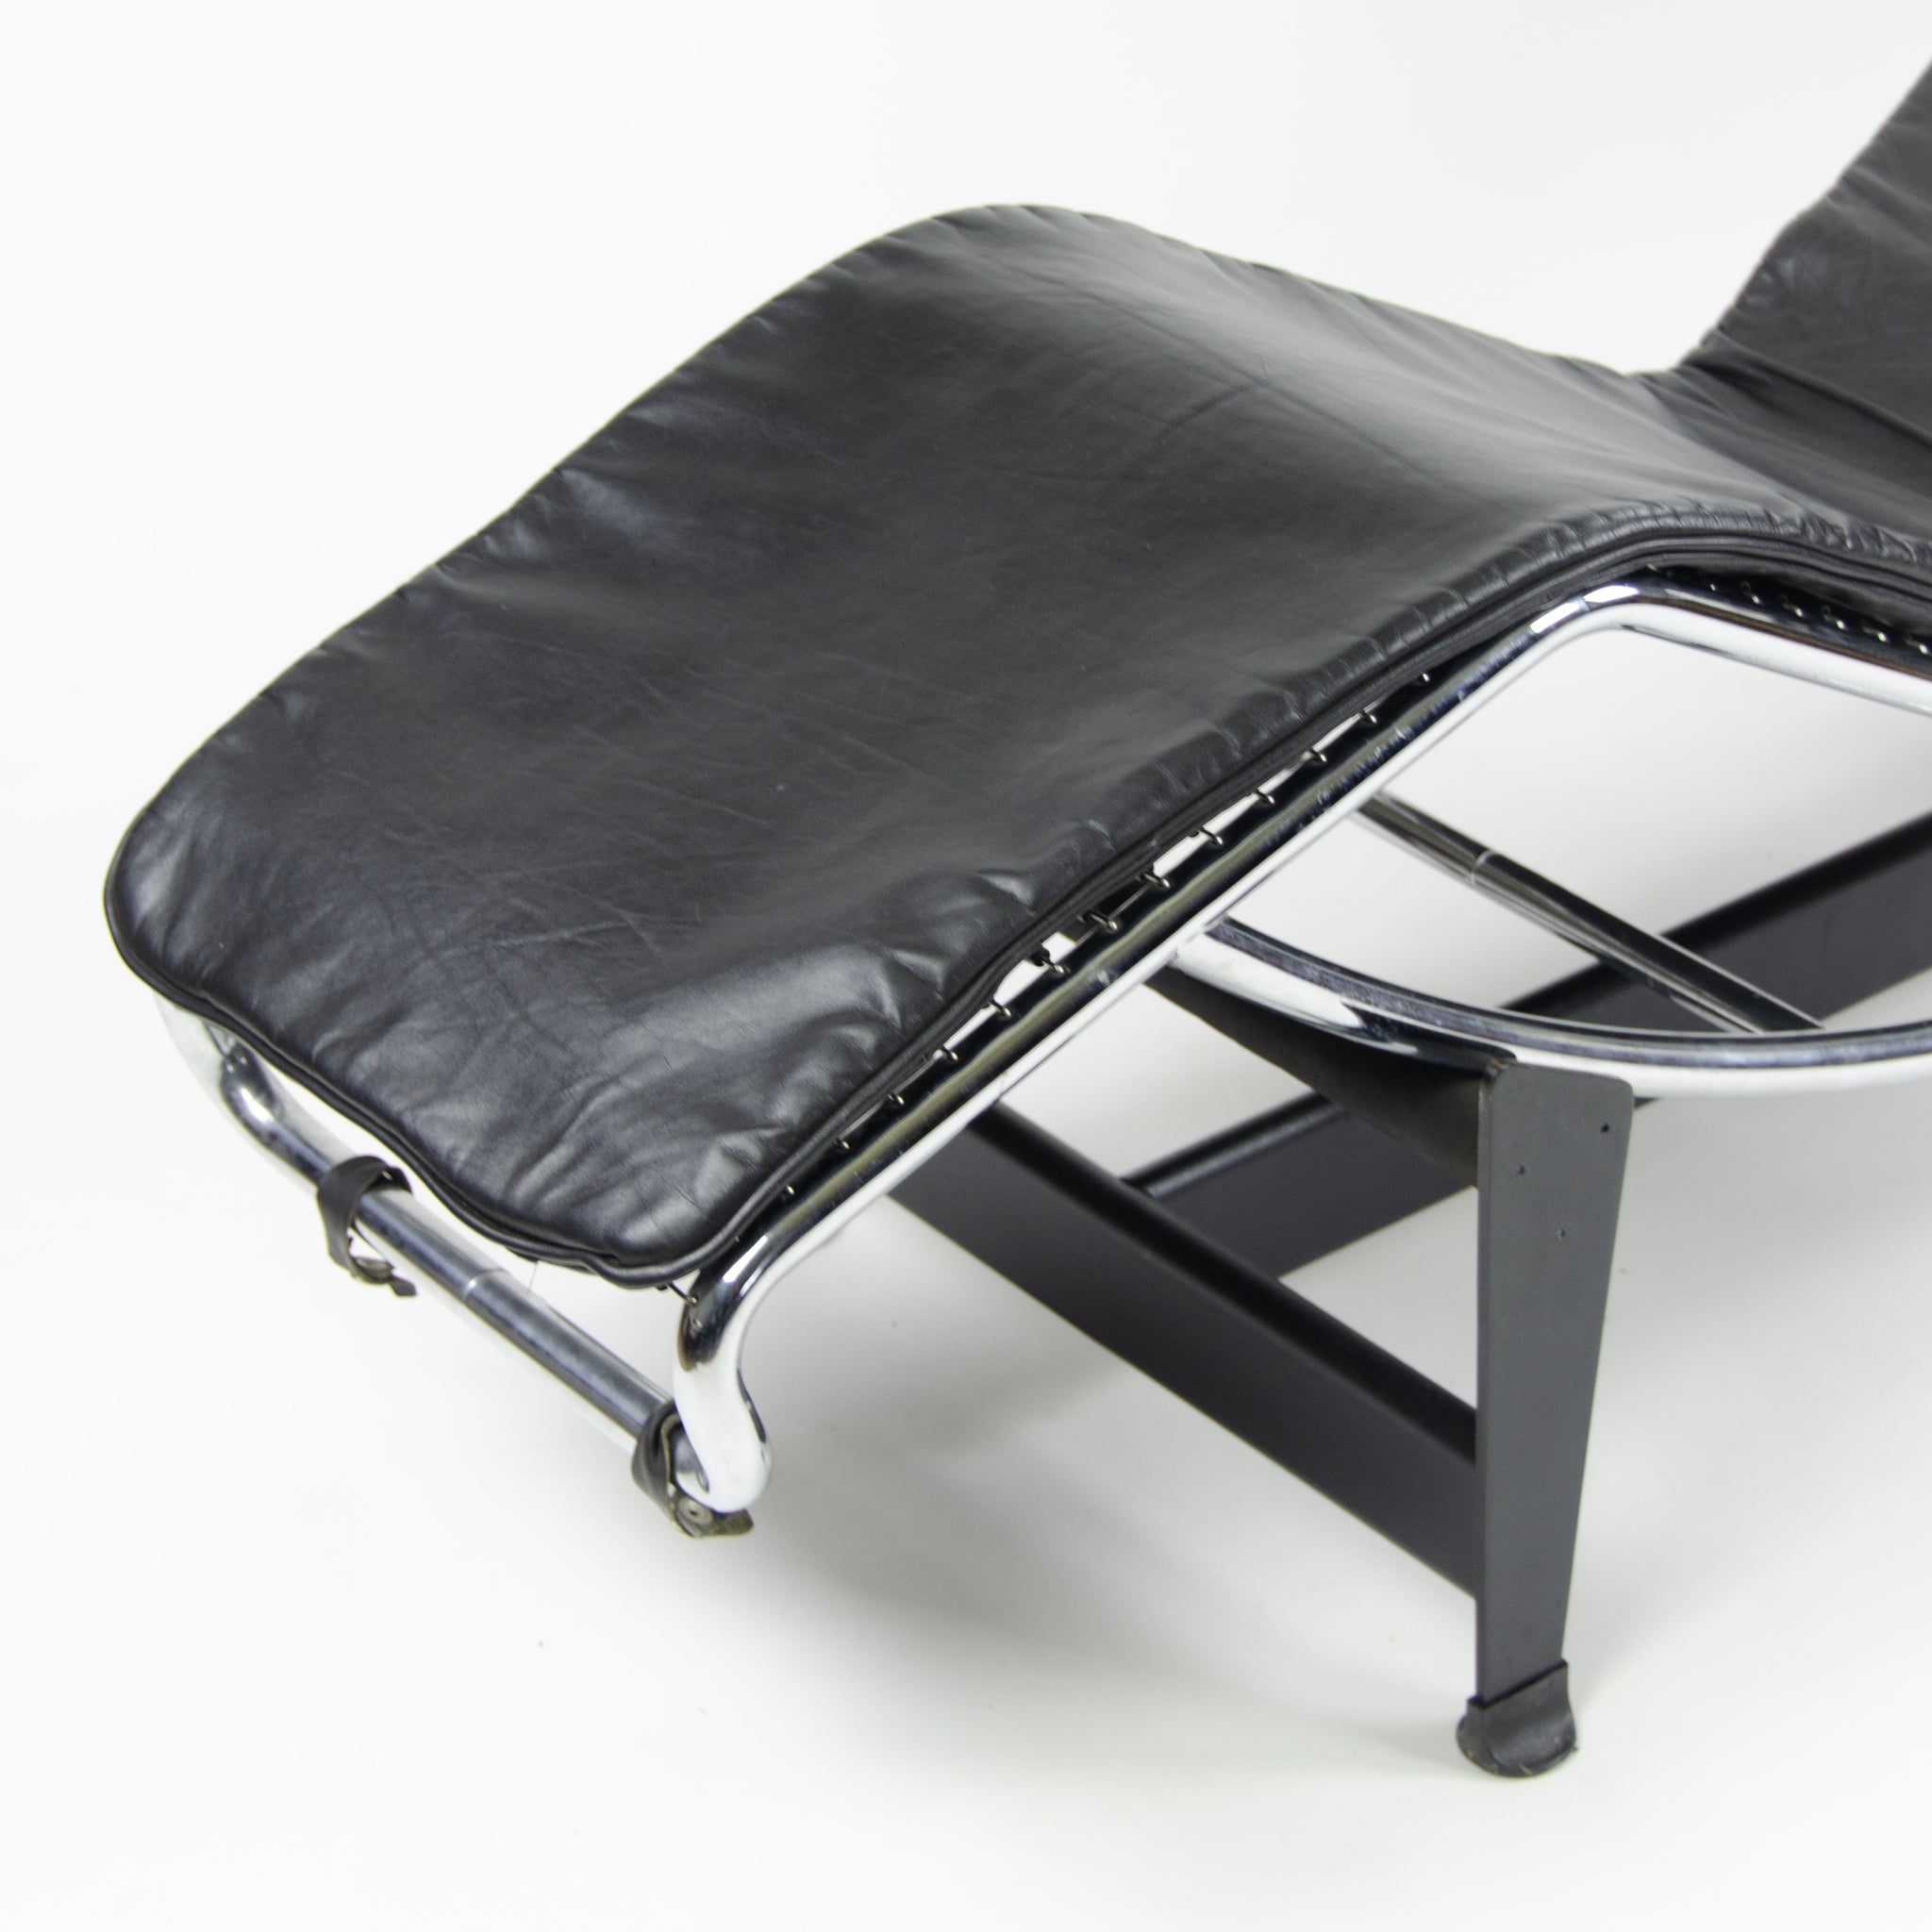 SOLD Le Corbusier Cassina LC4 Chaise Lounge Chair Black Leather Vintage Original Piece